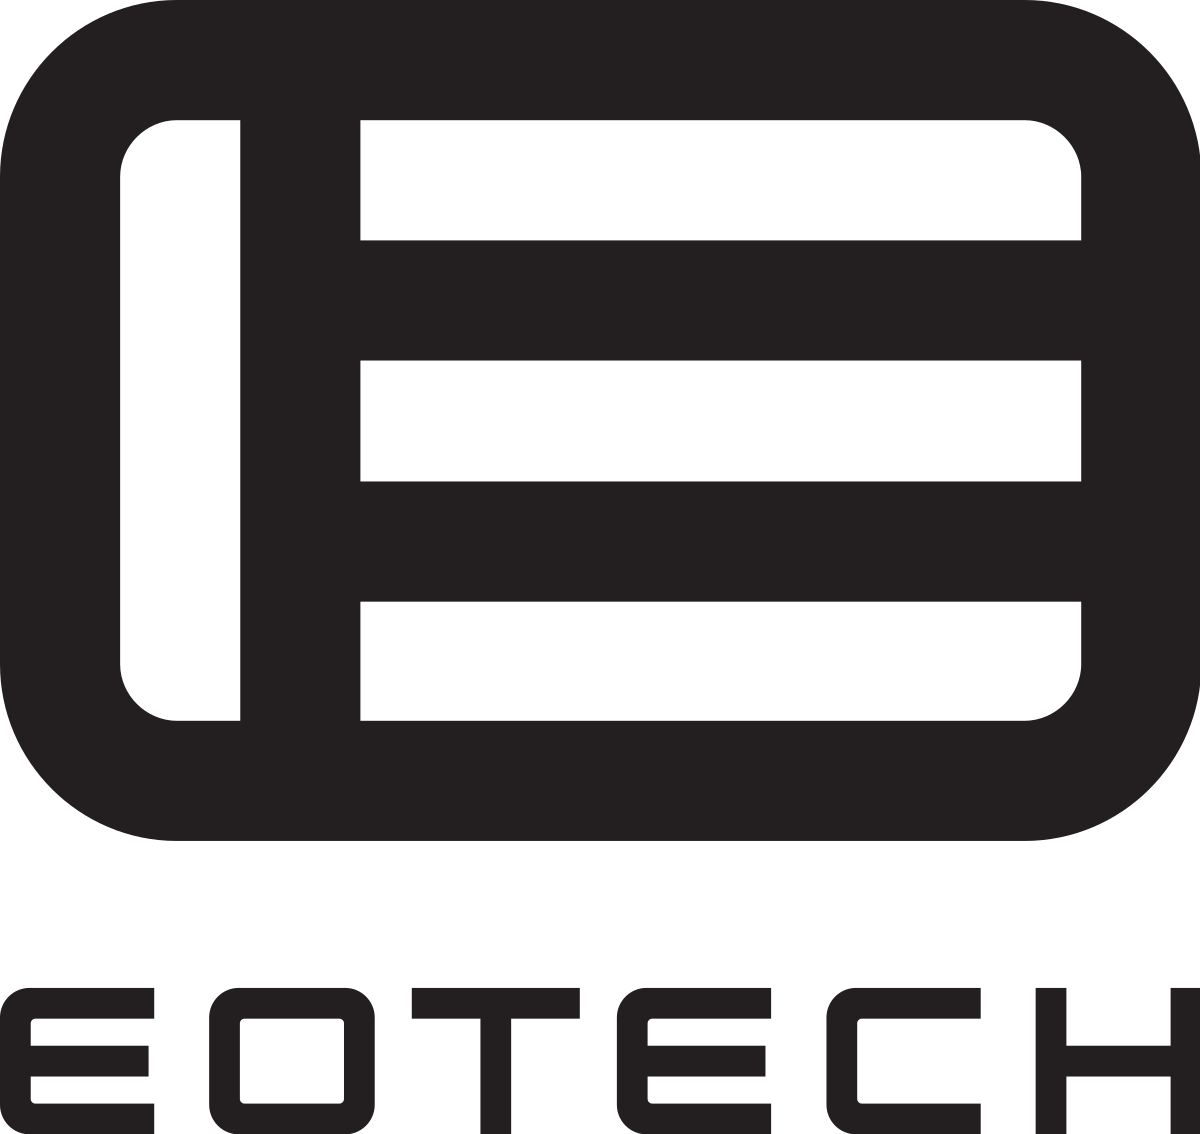 EO Tech